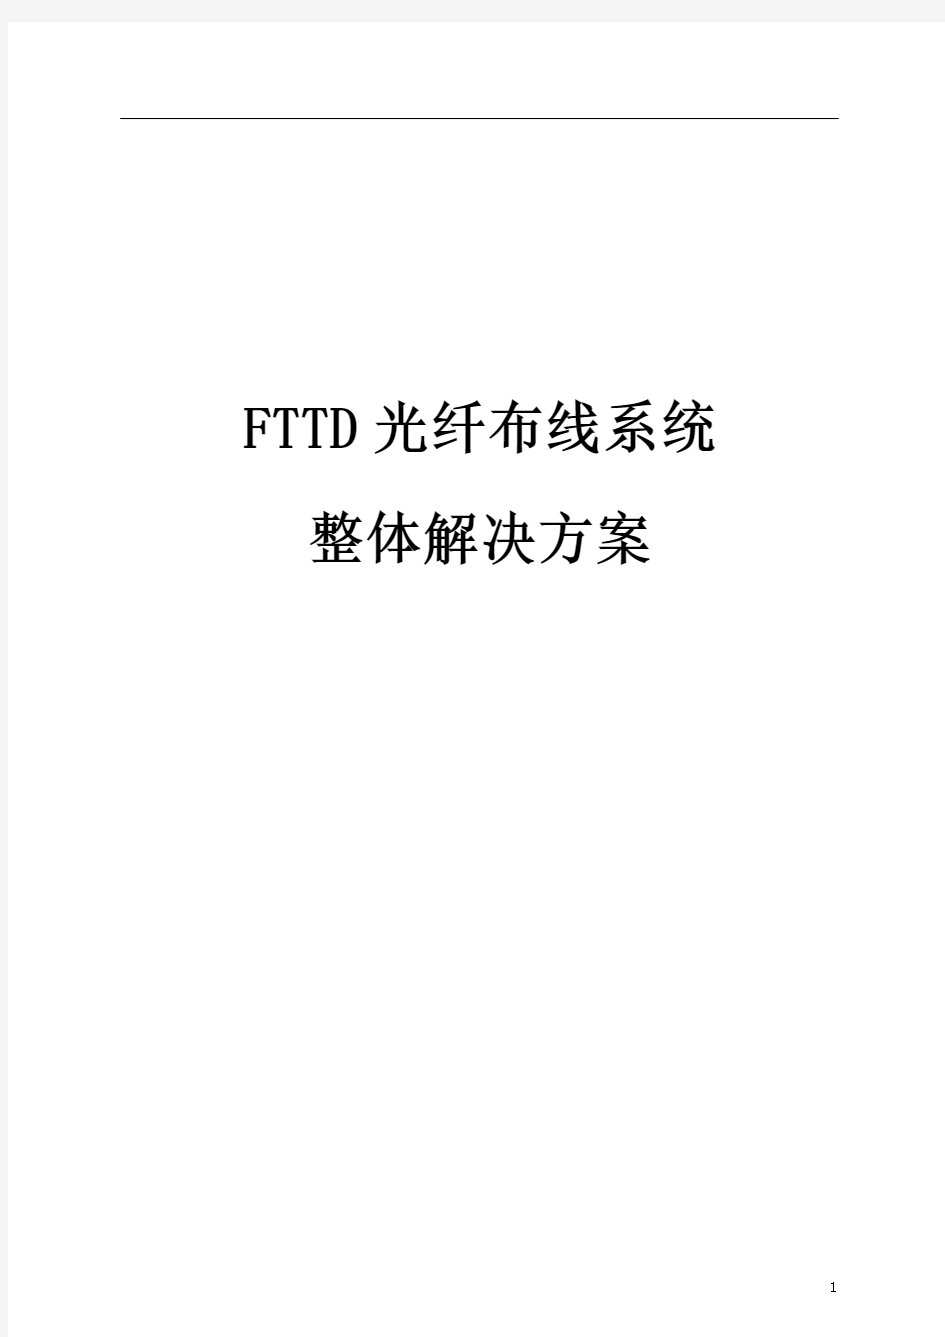 FTTD光纤布线系统解决方案